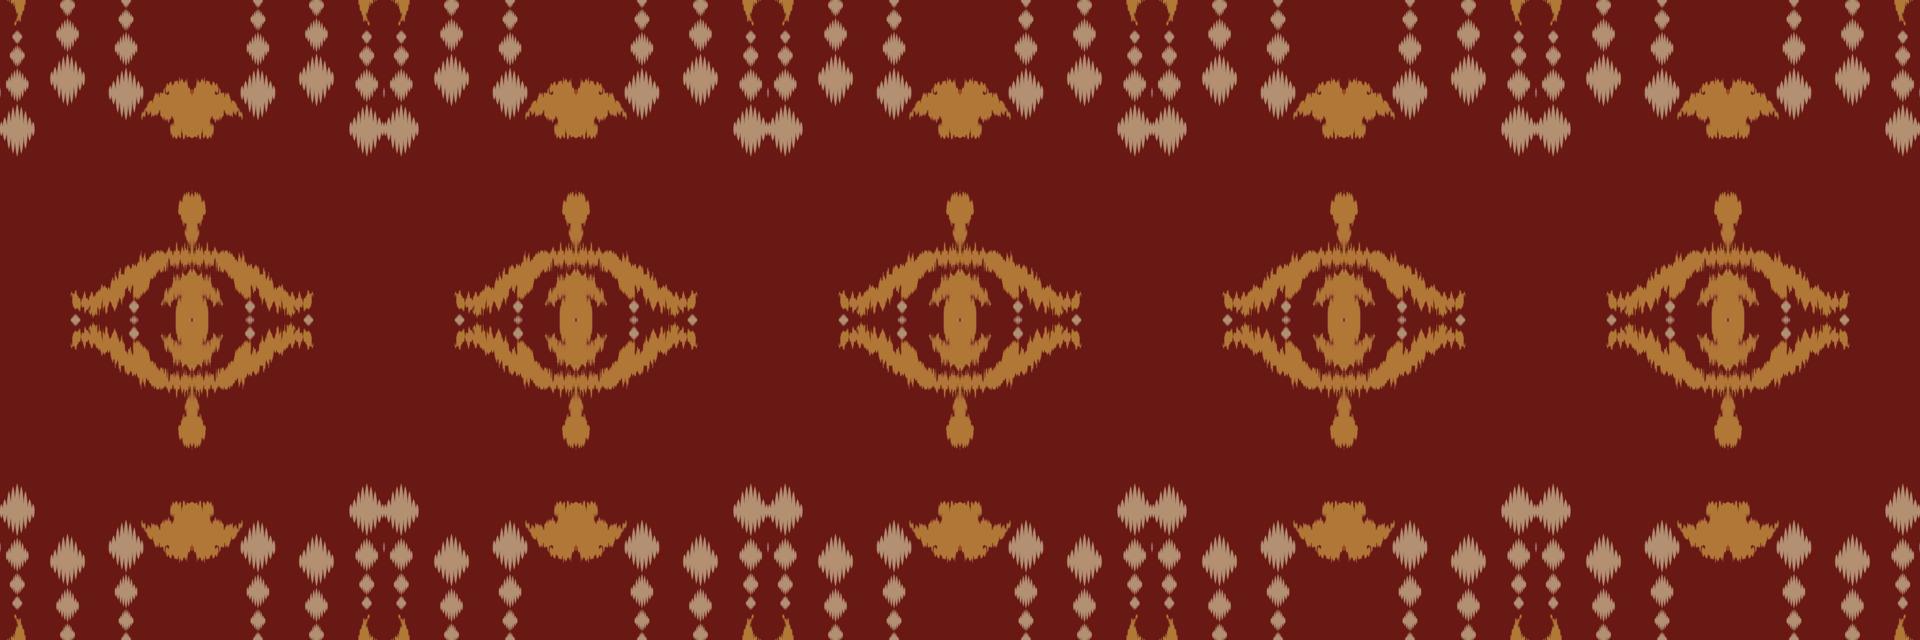 ikat grenze tribal afrika nahtloses muster. ethnische geometrische batik ikkat digitaler vektor textildesign für drucke stoff saree mughal pinsel symbol schwaden textur kurti kurtis kurtas